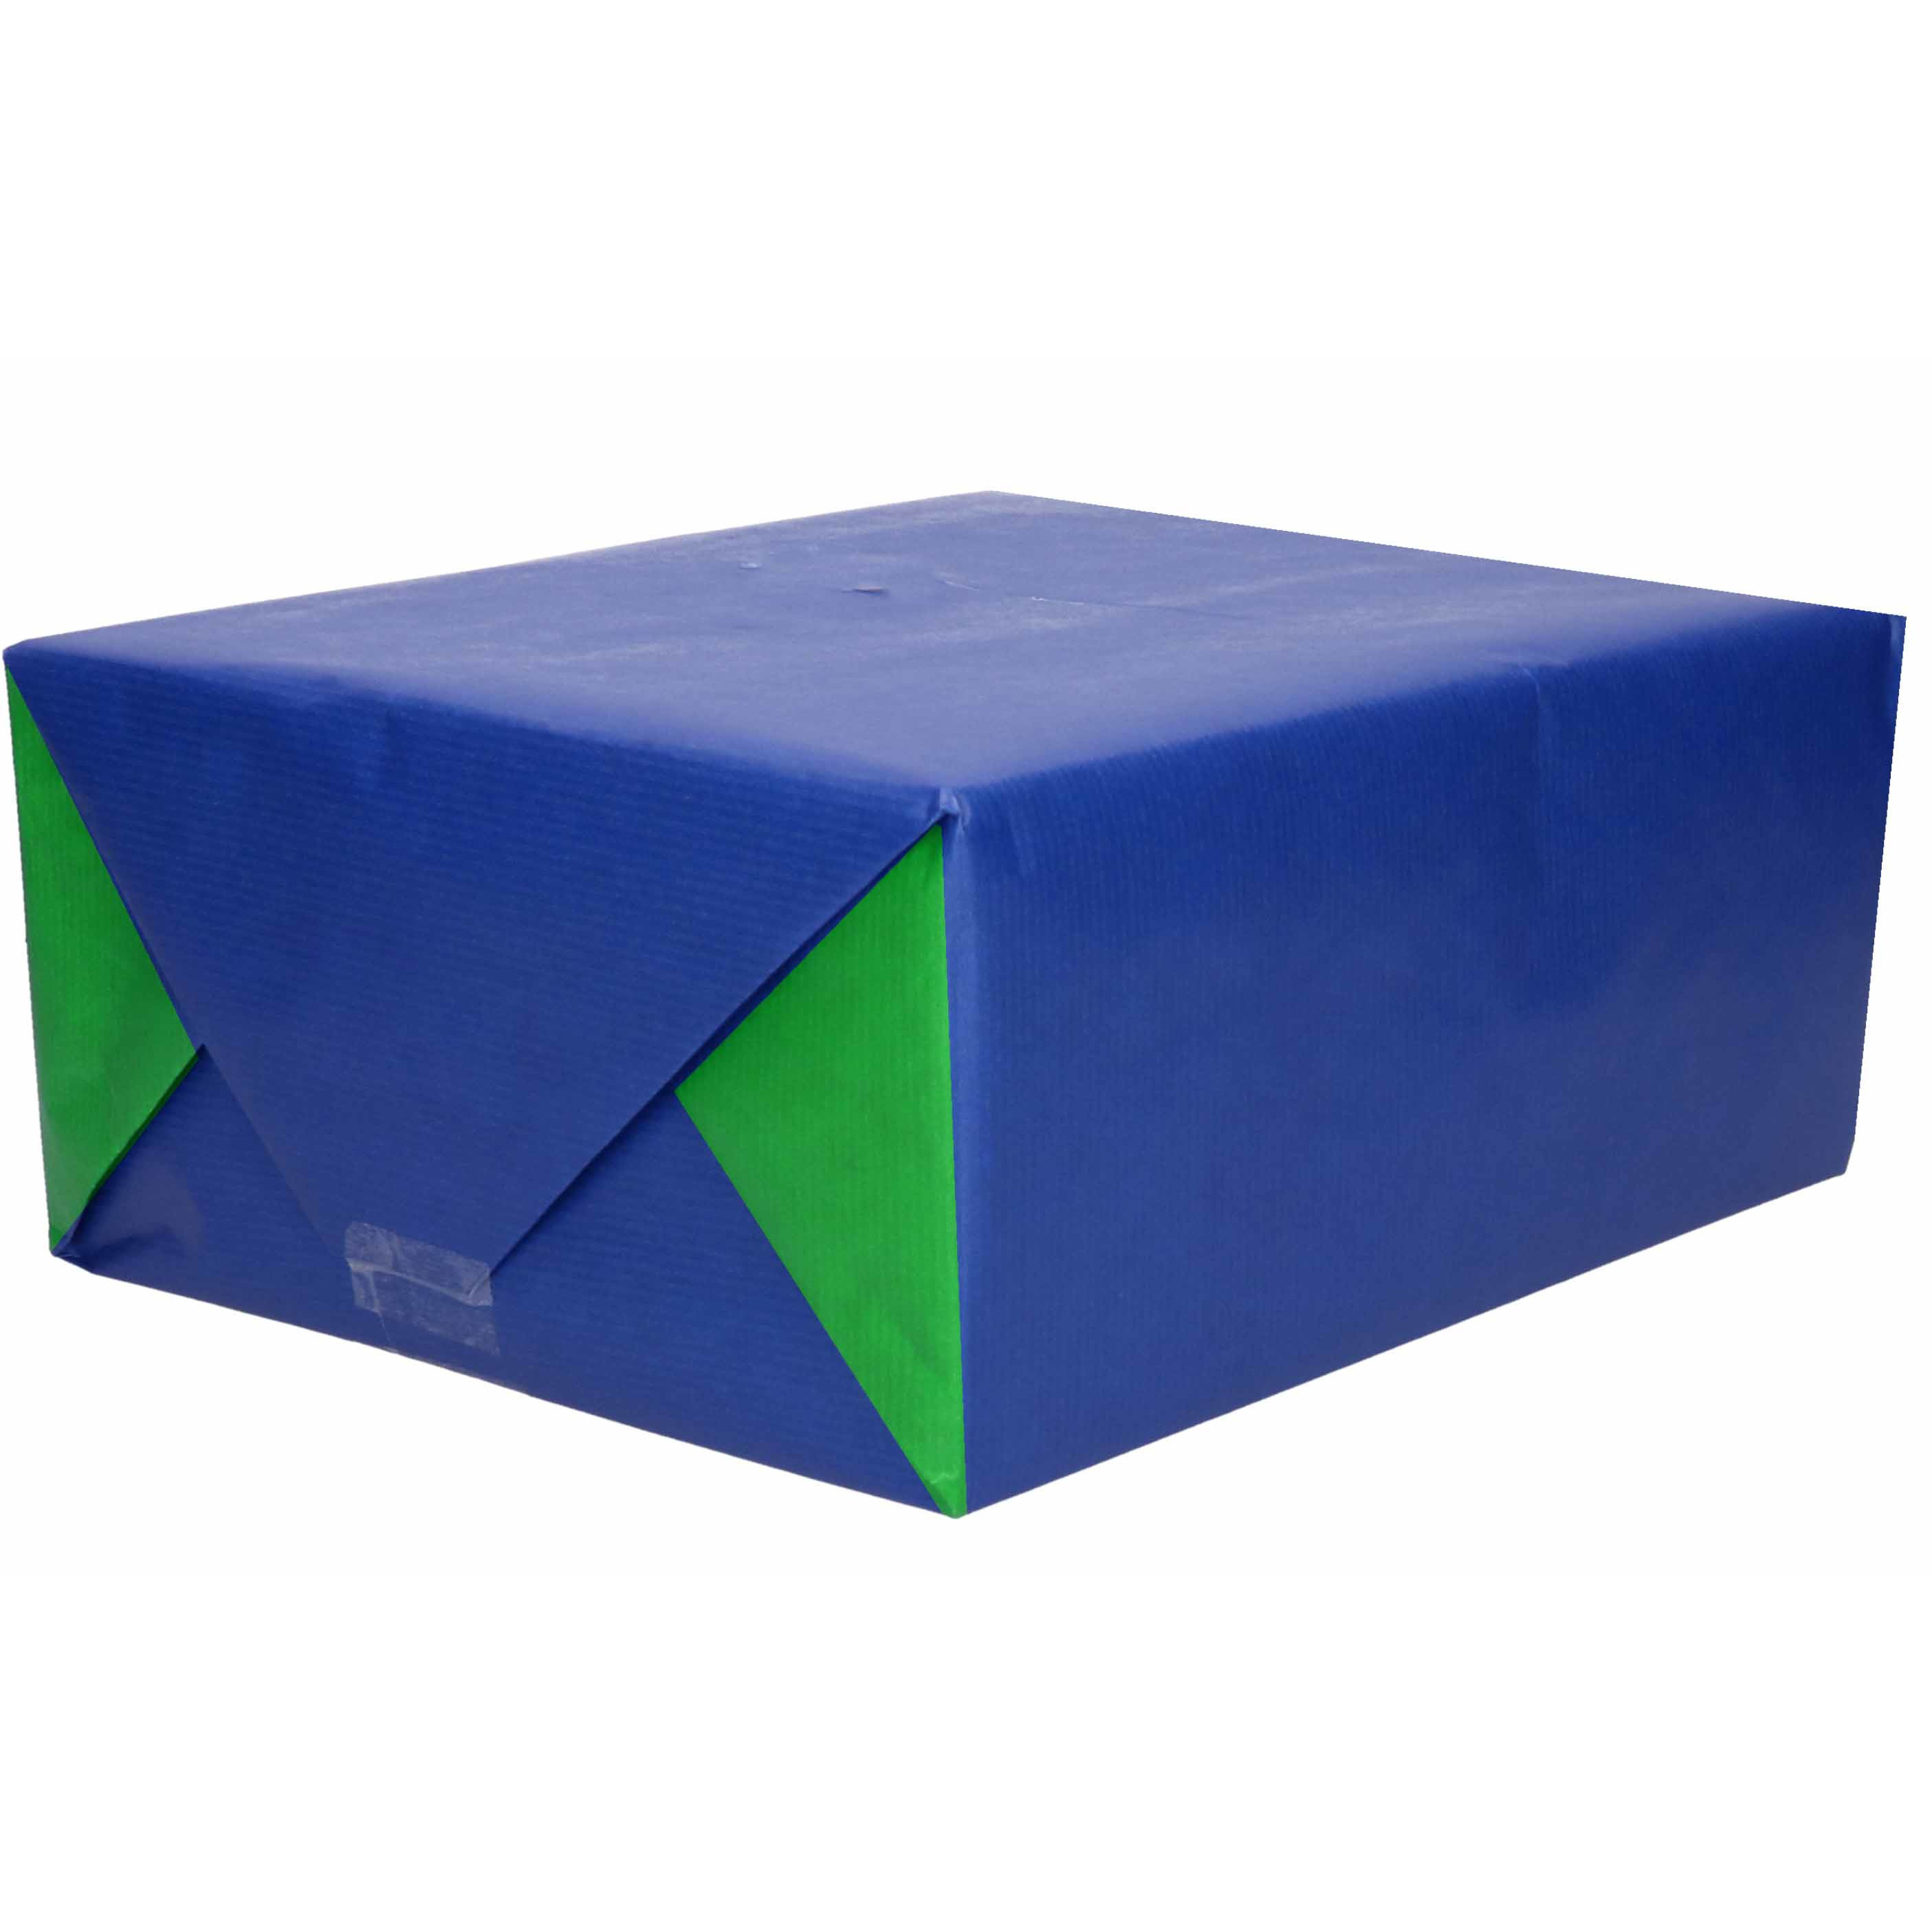 Cadeaupapier/Inpakpapier dubbelzijdig blauw - groen 200 x 70 cm